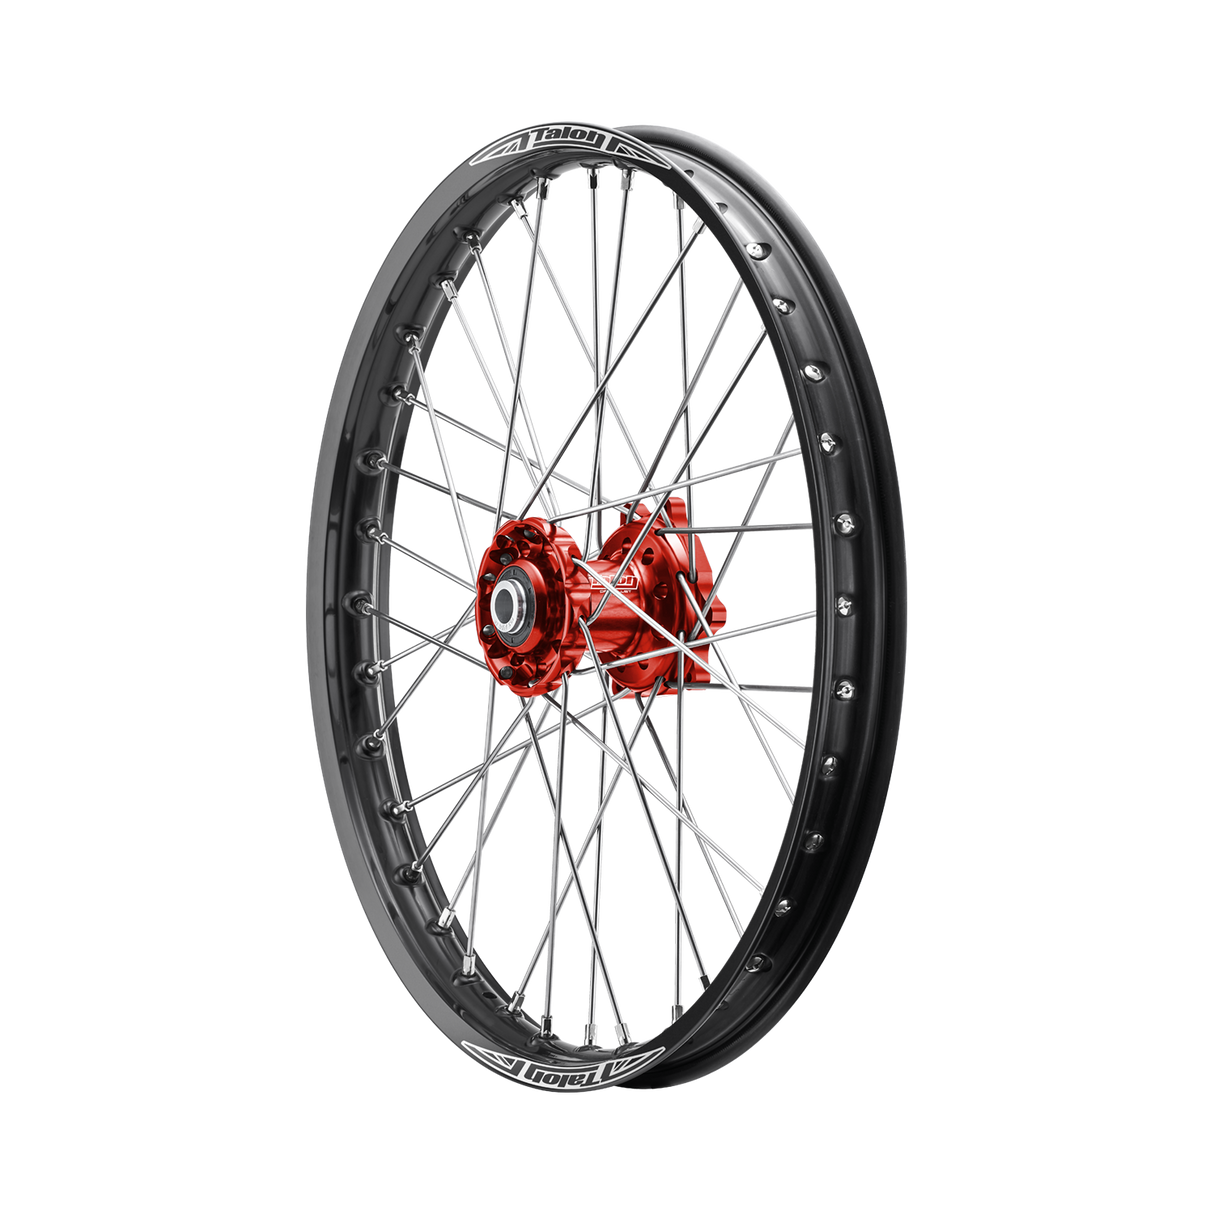 Talon 50cc Big Wheel Front Wheel Black Rim - Red Hubs